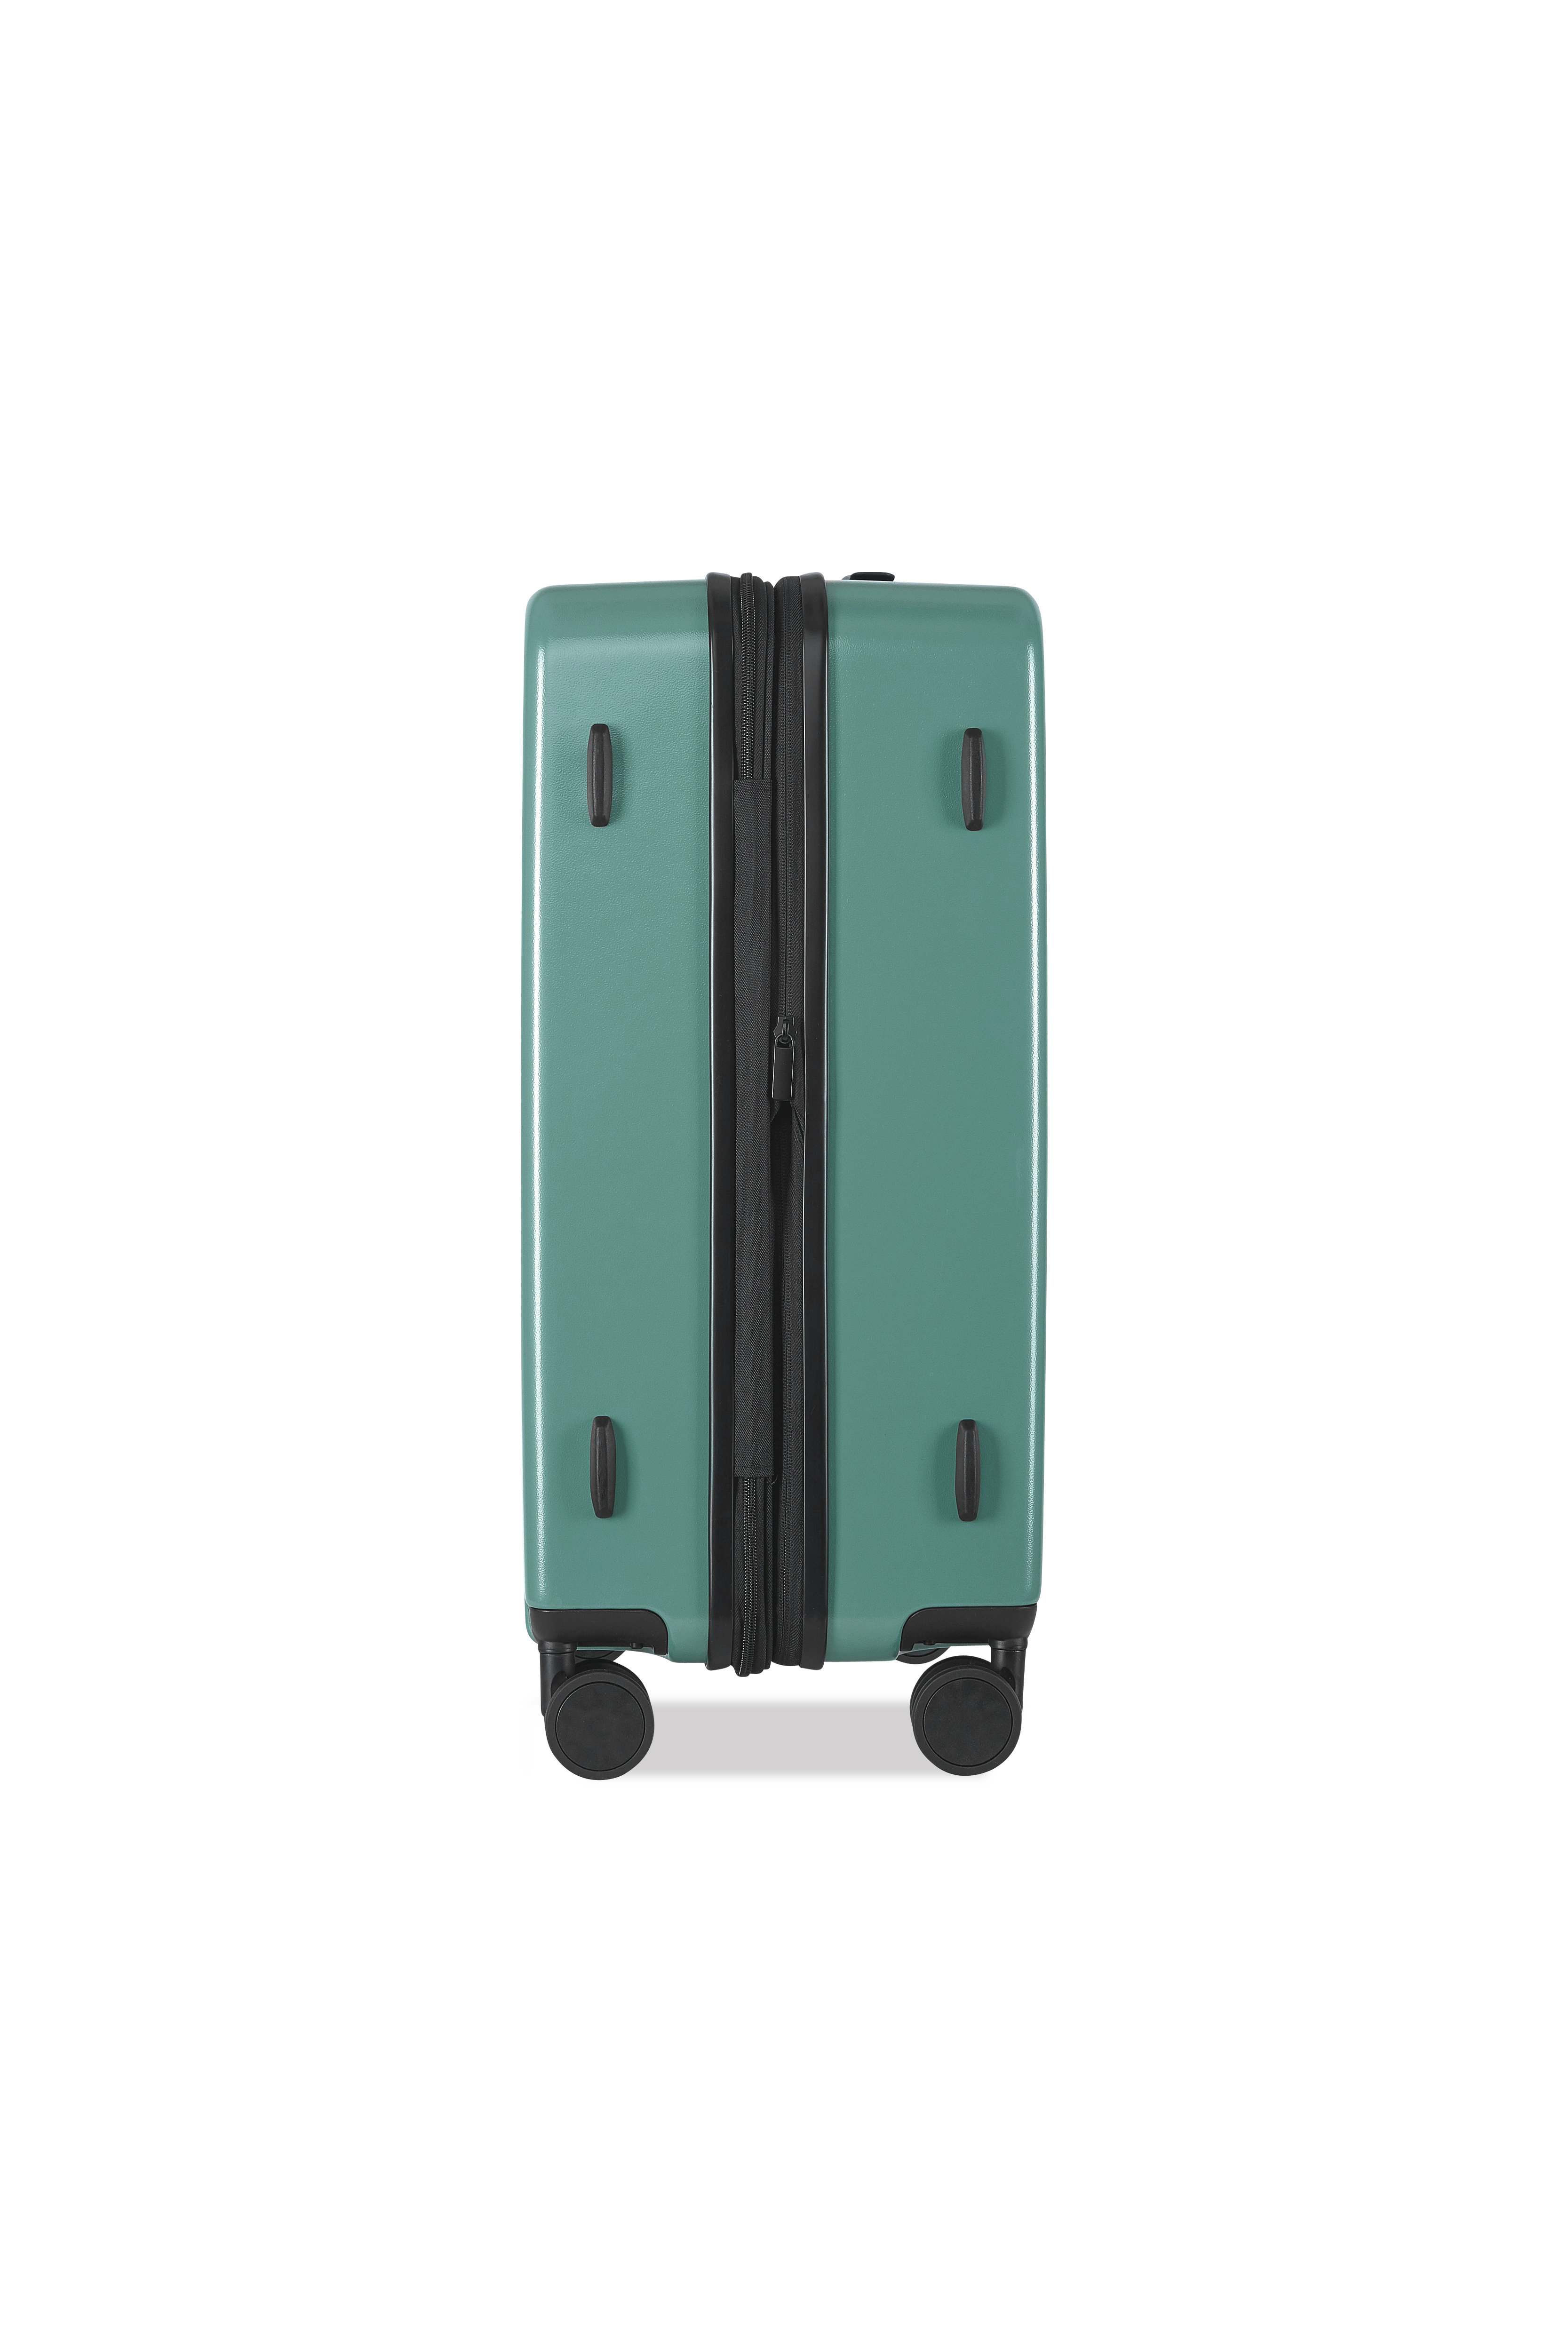 Zero Luggage Mint